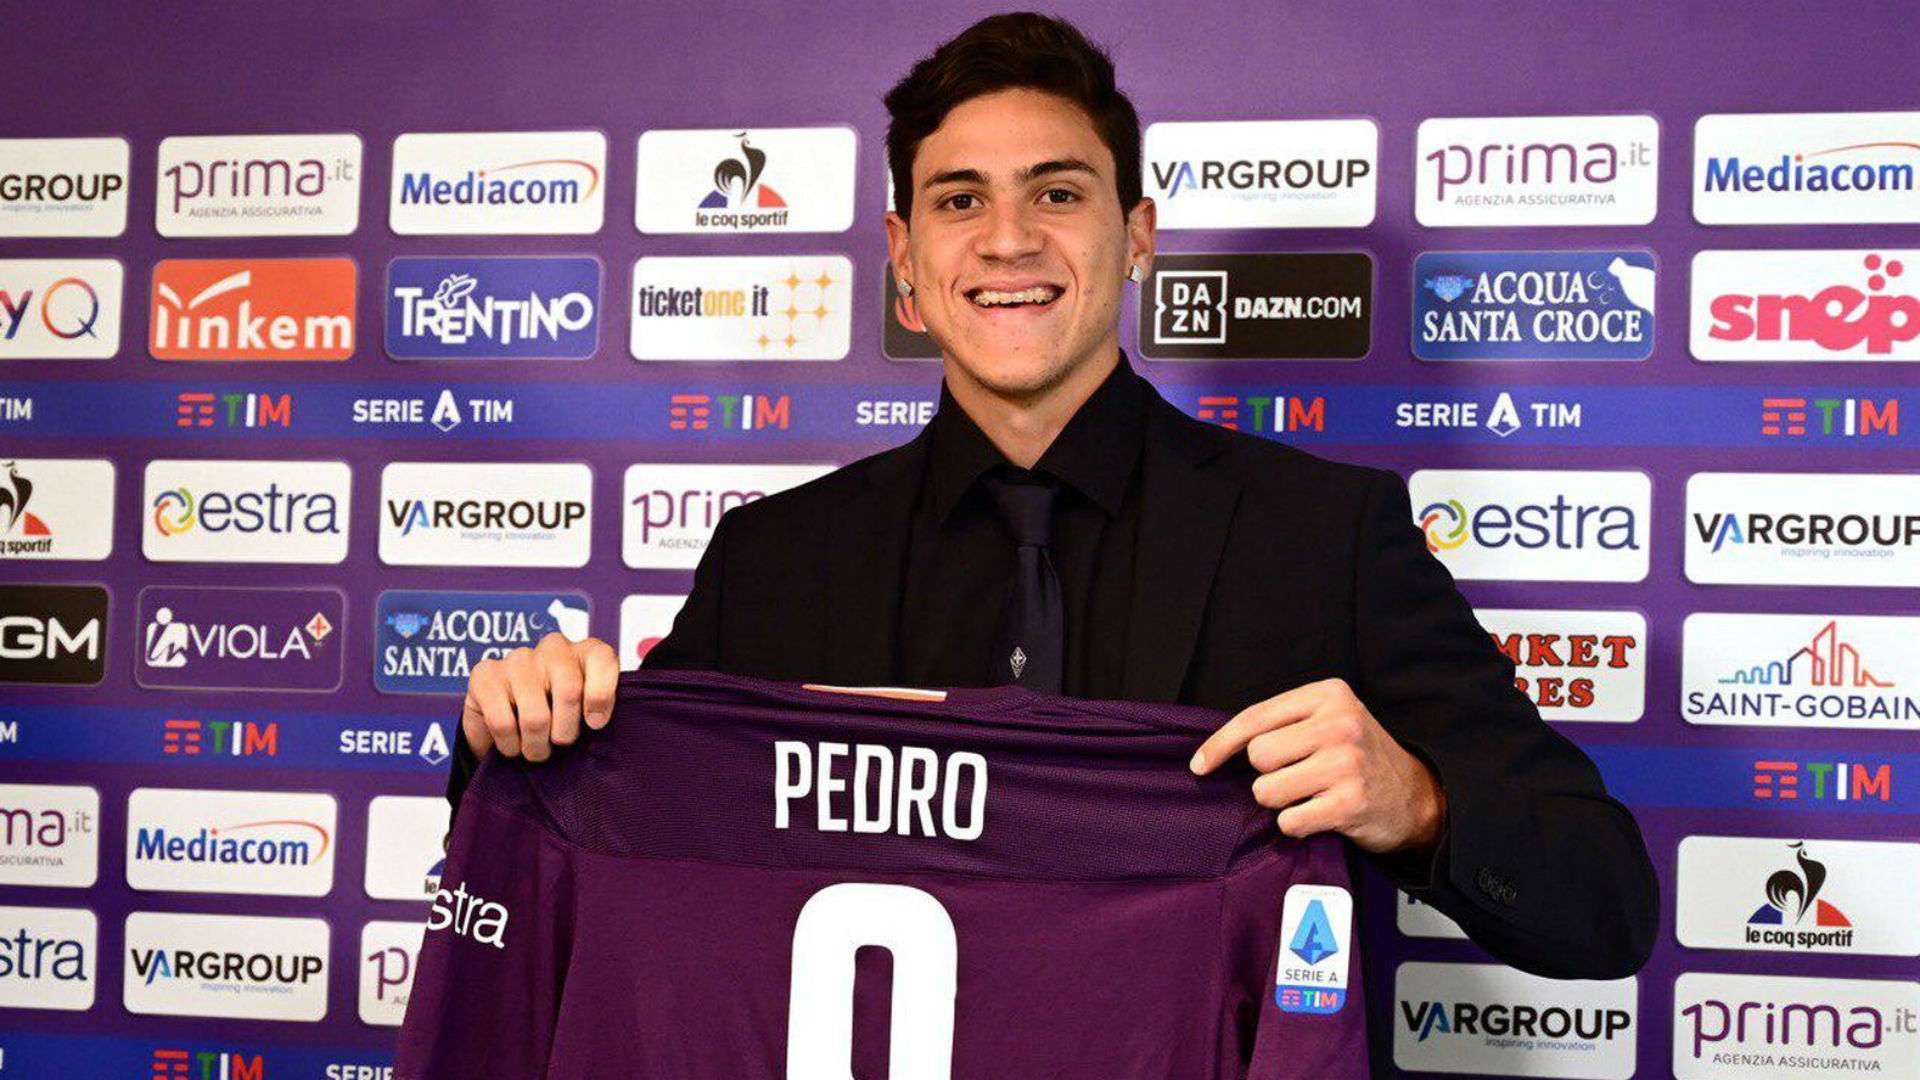 Pedro Fiorentina Serie A 11 09 2019